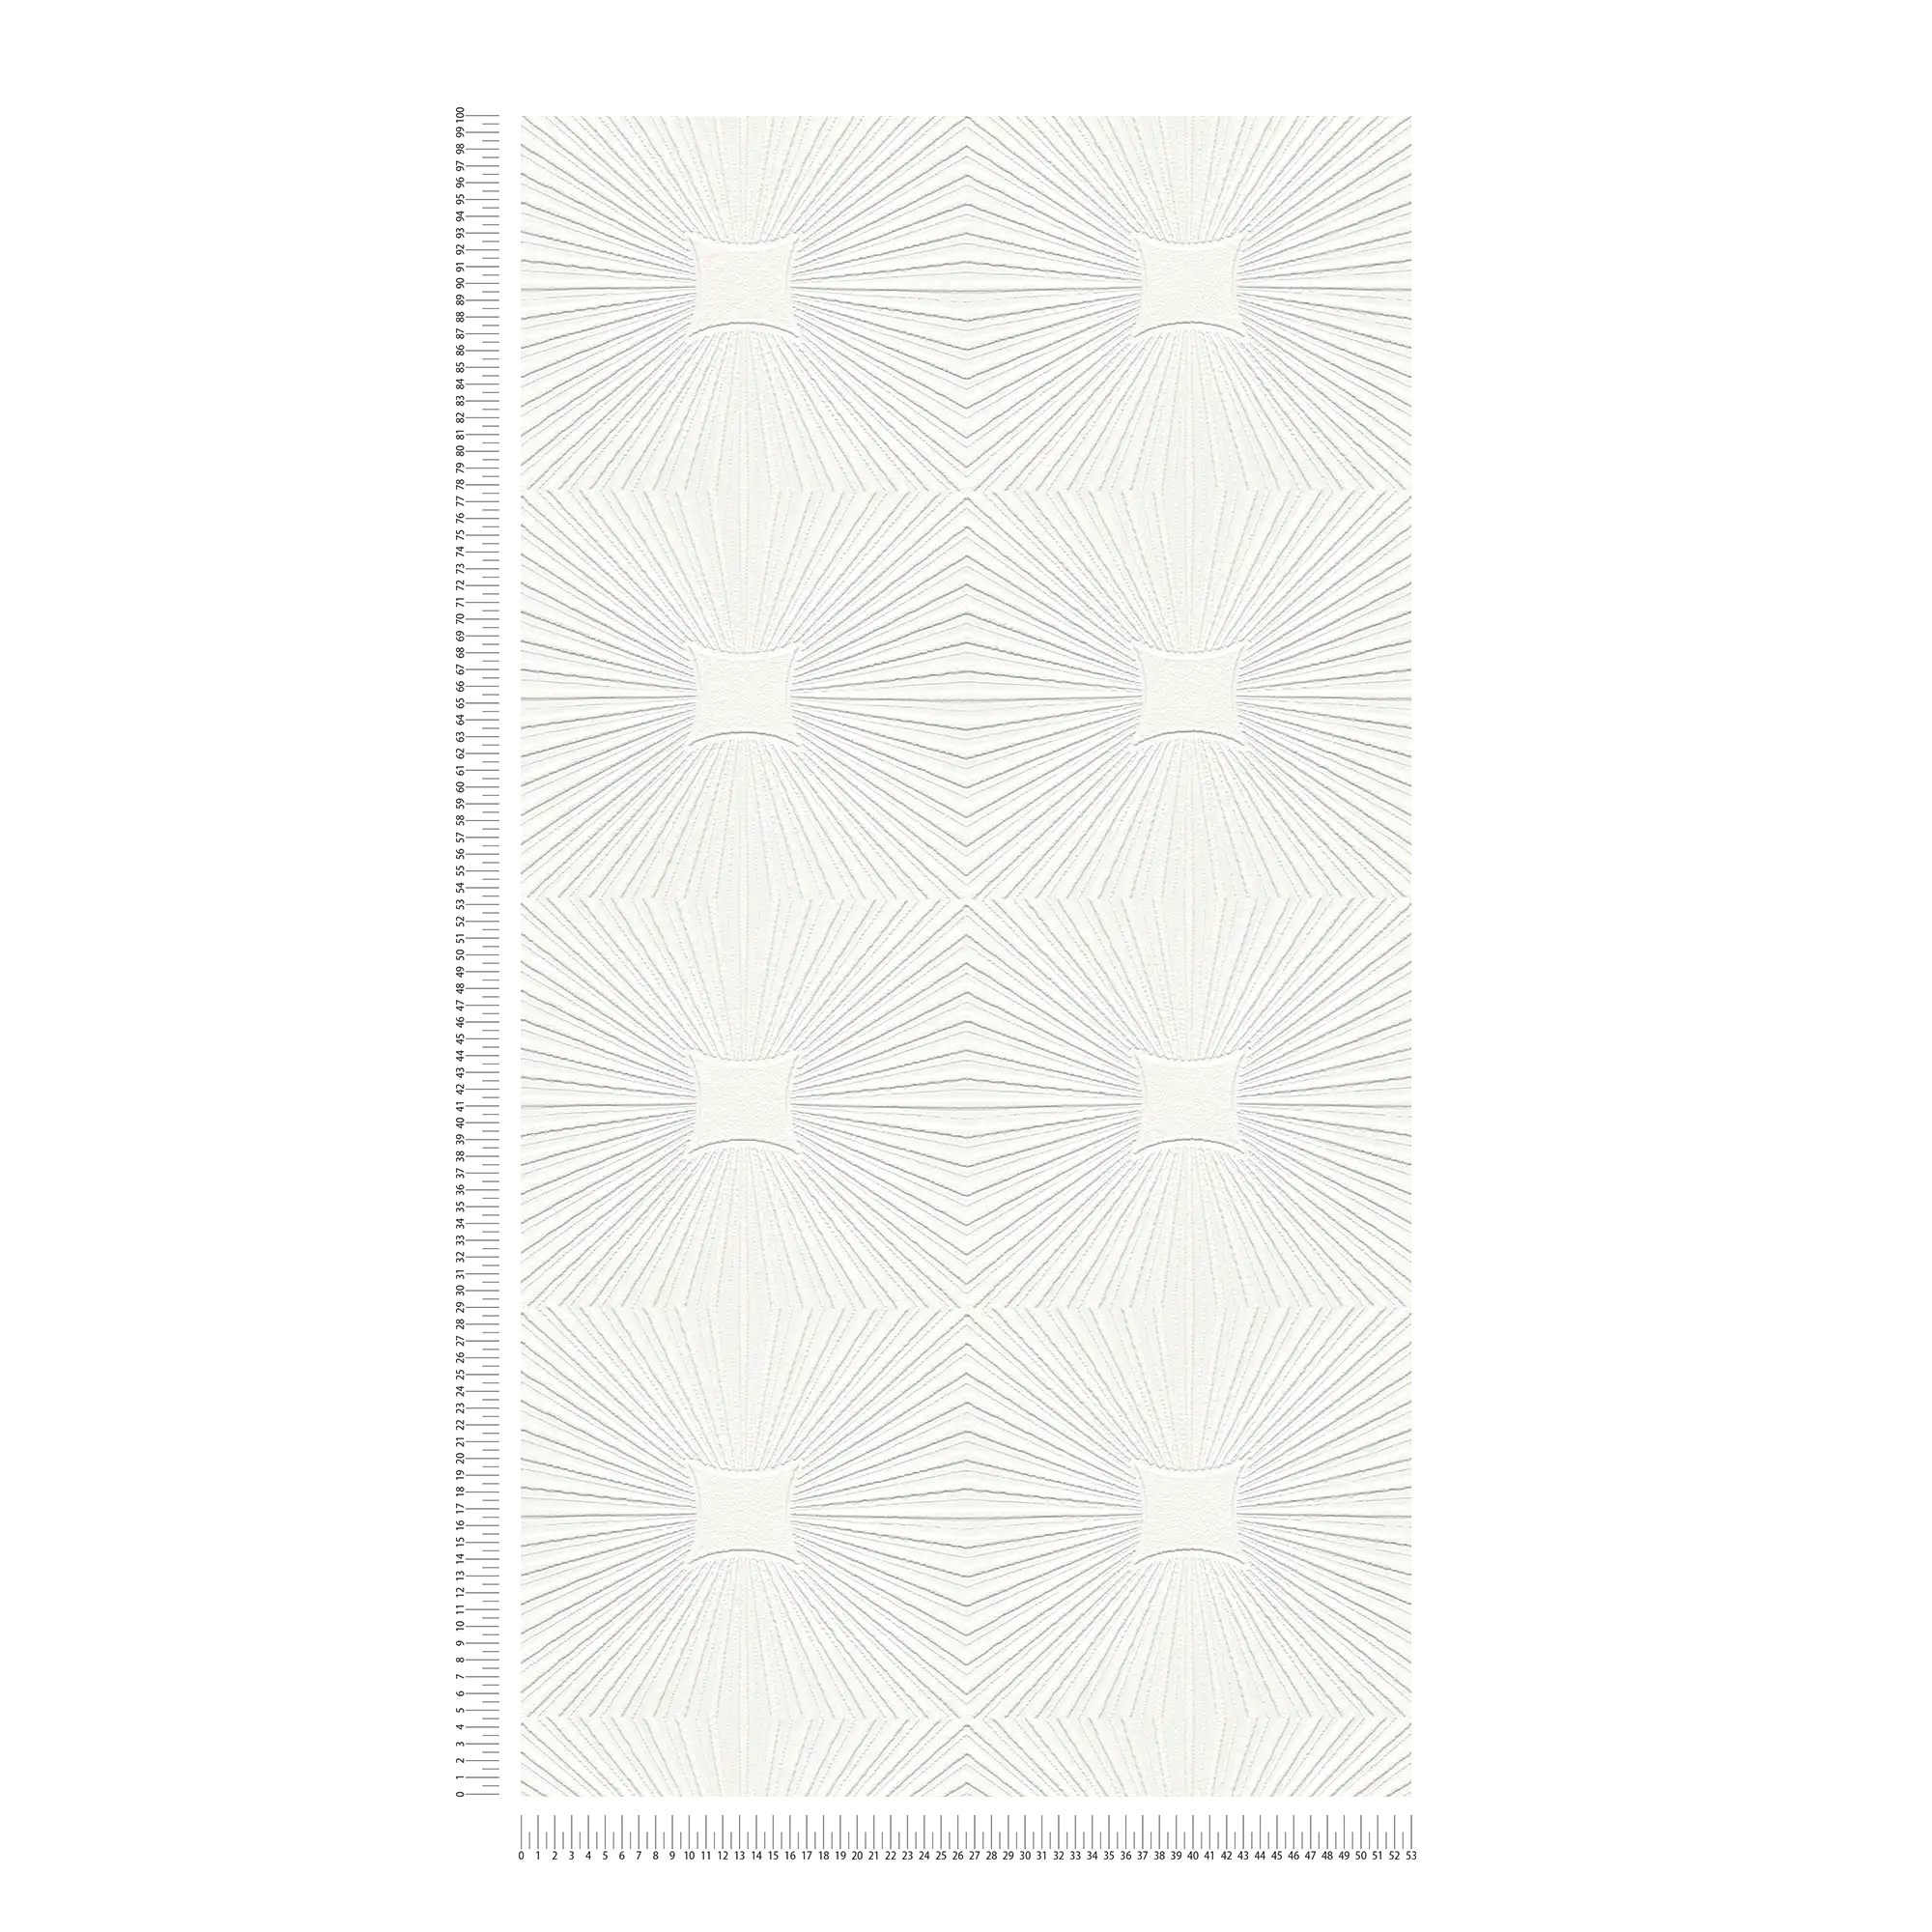             White wallpaper with 3D texture design retro pattern
        